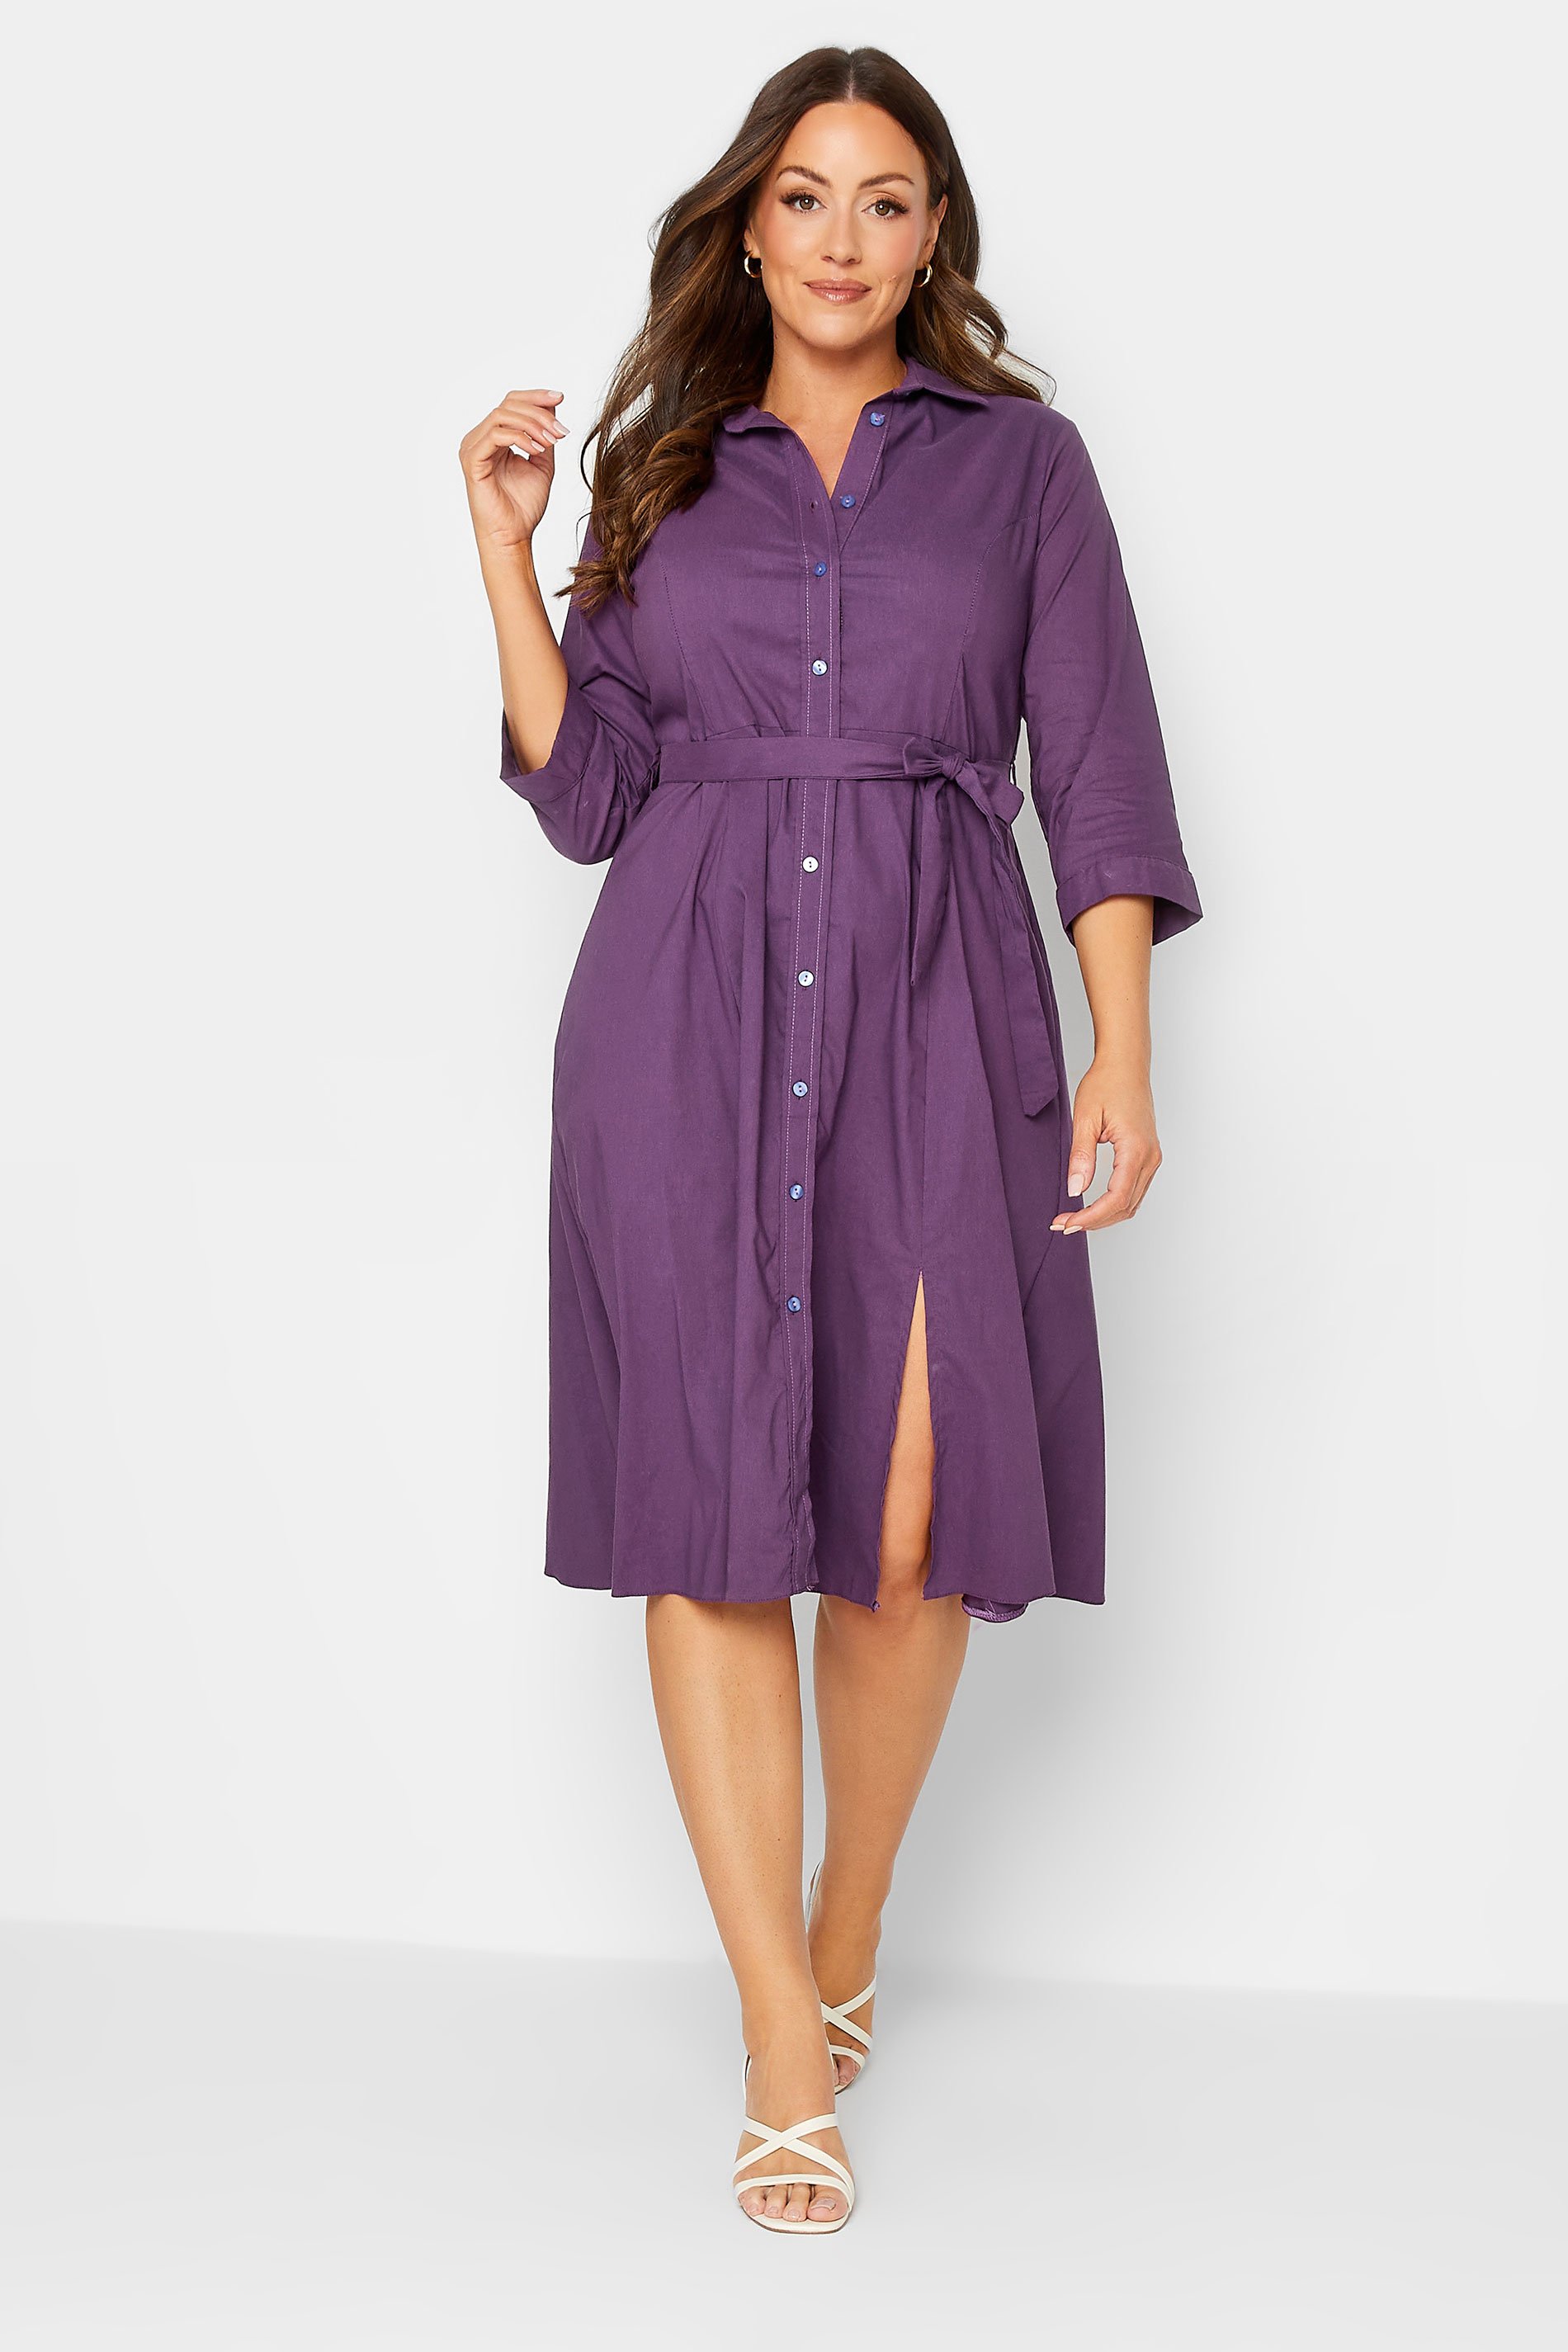 M&Co Purple Tie Waist Shirt Dress | M&Co 1